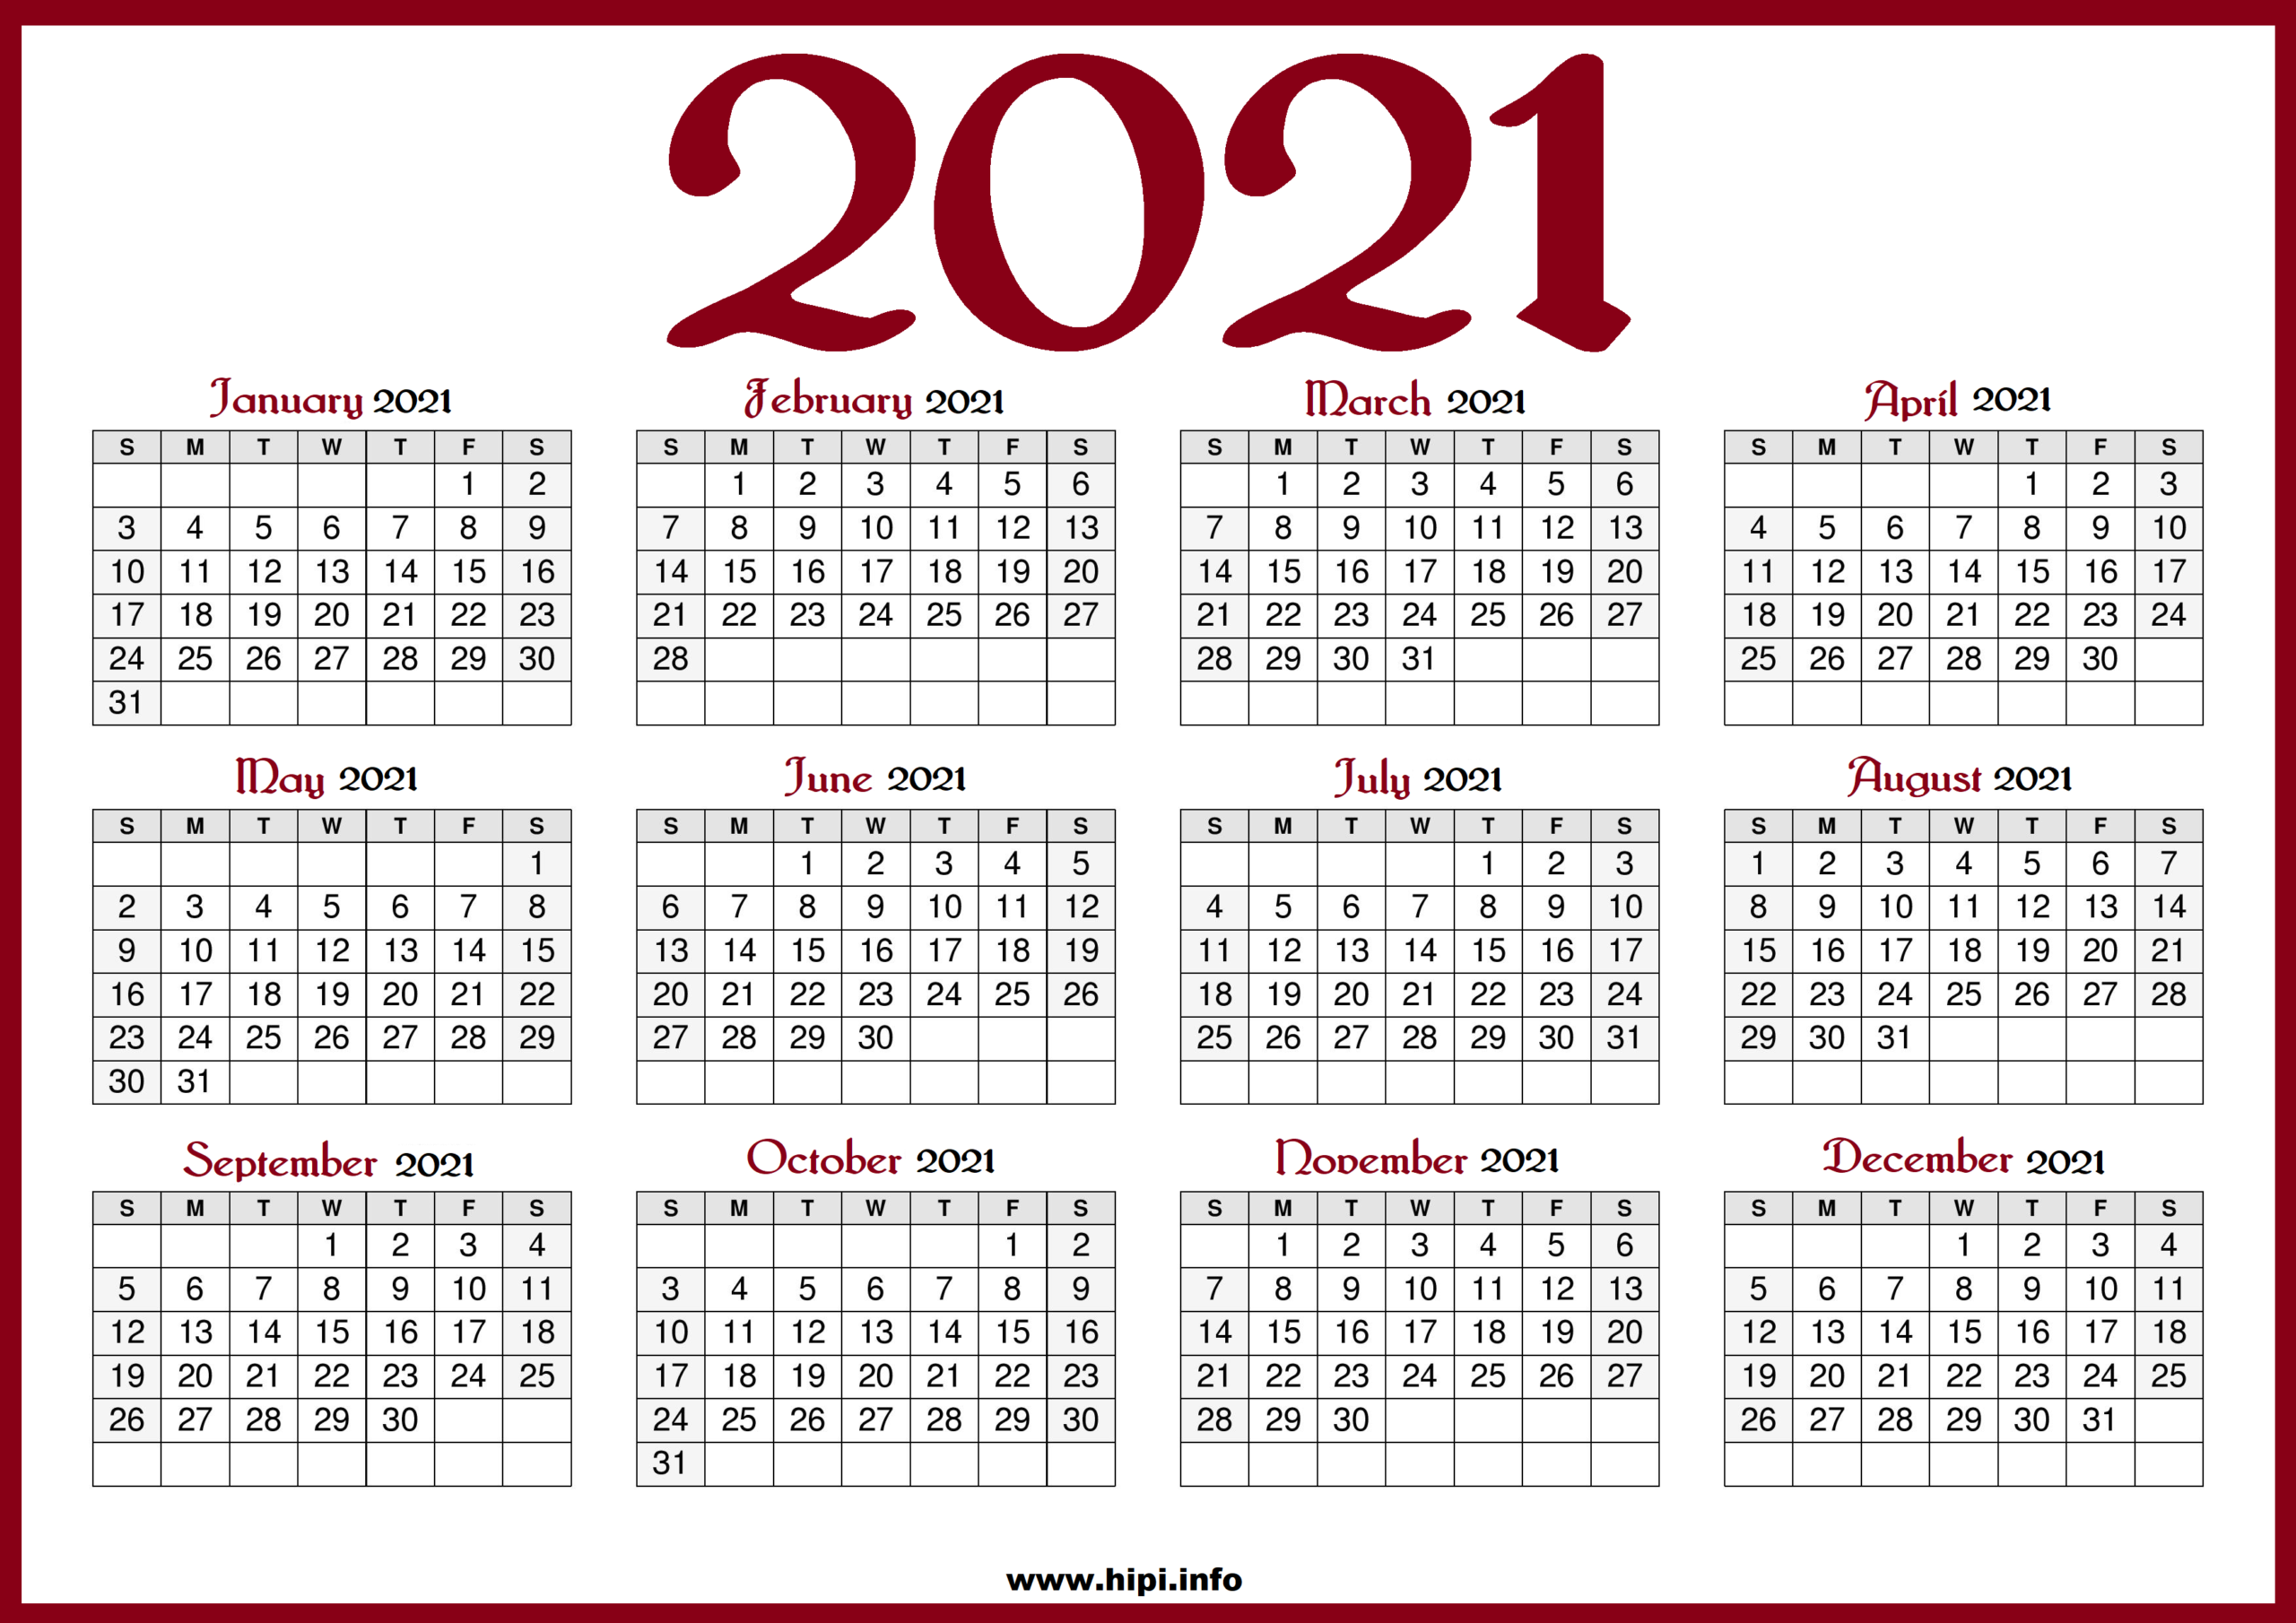 Printable 2021 Calendar With Us Holidays - Red Color - Hipi